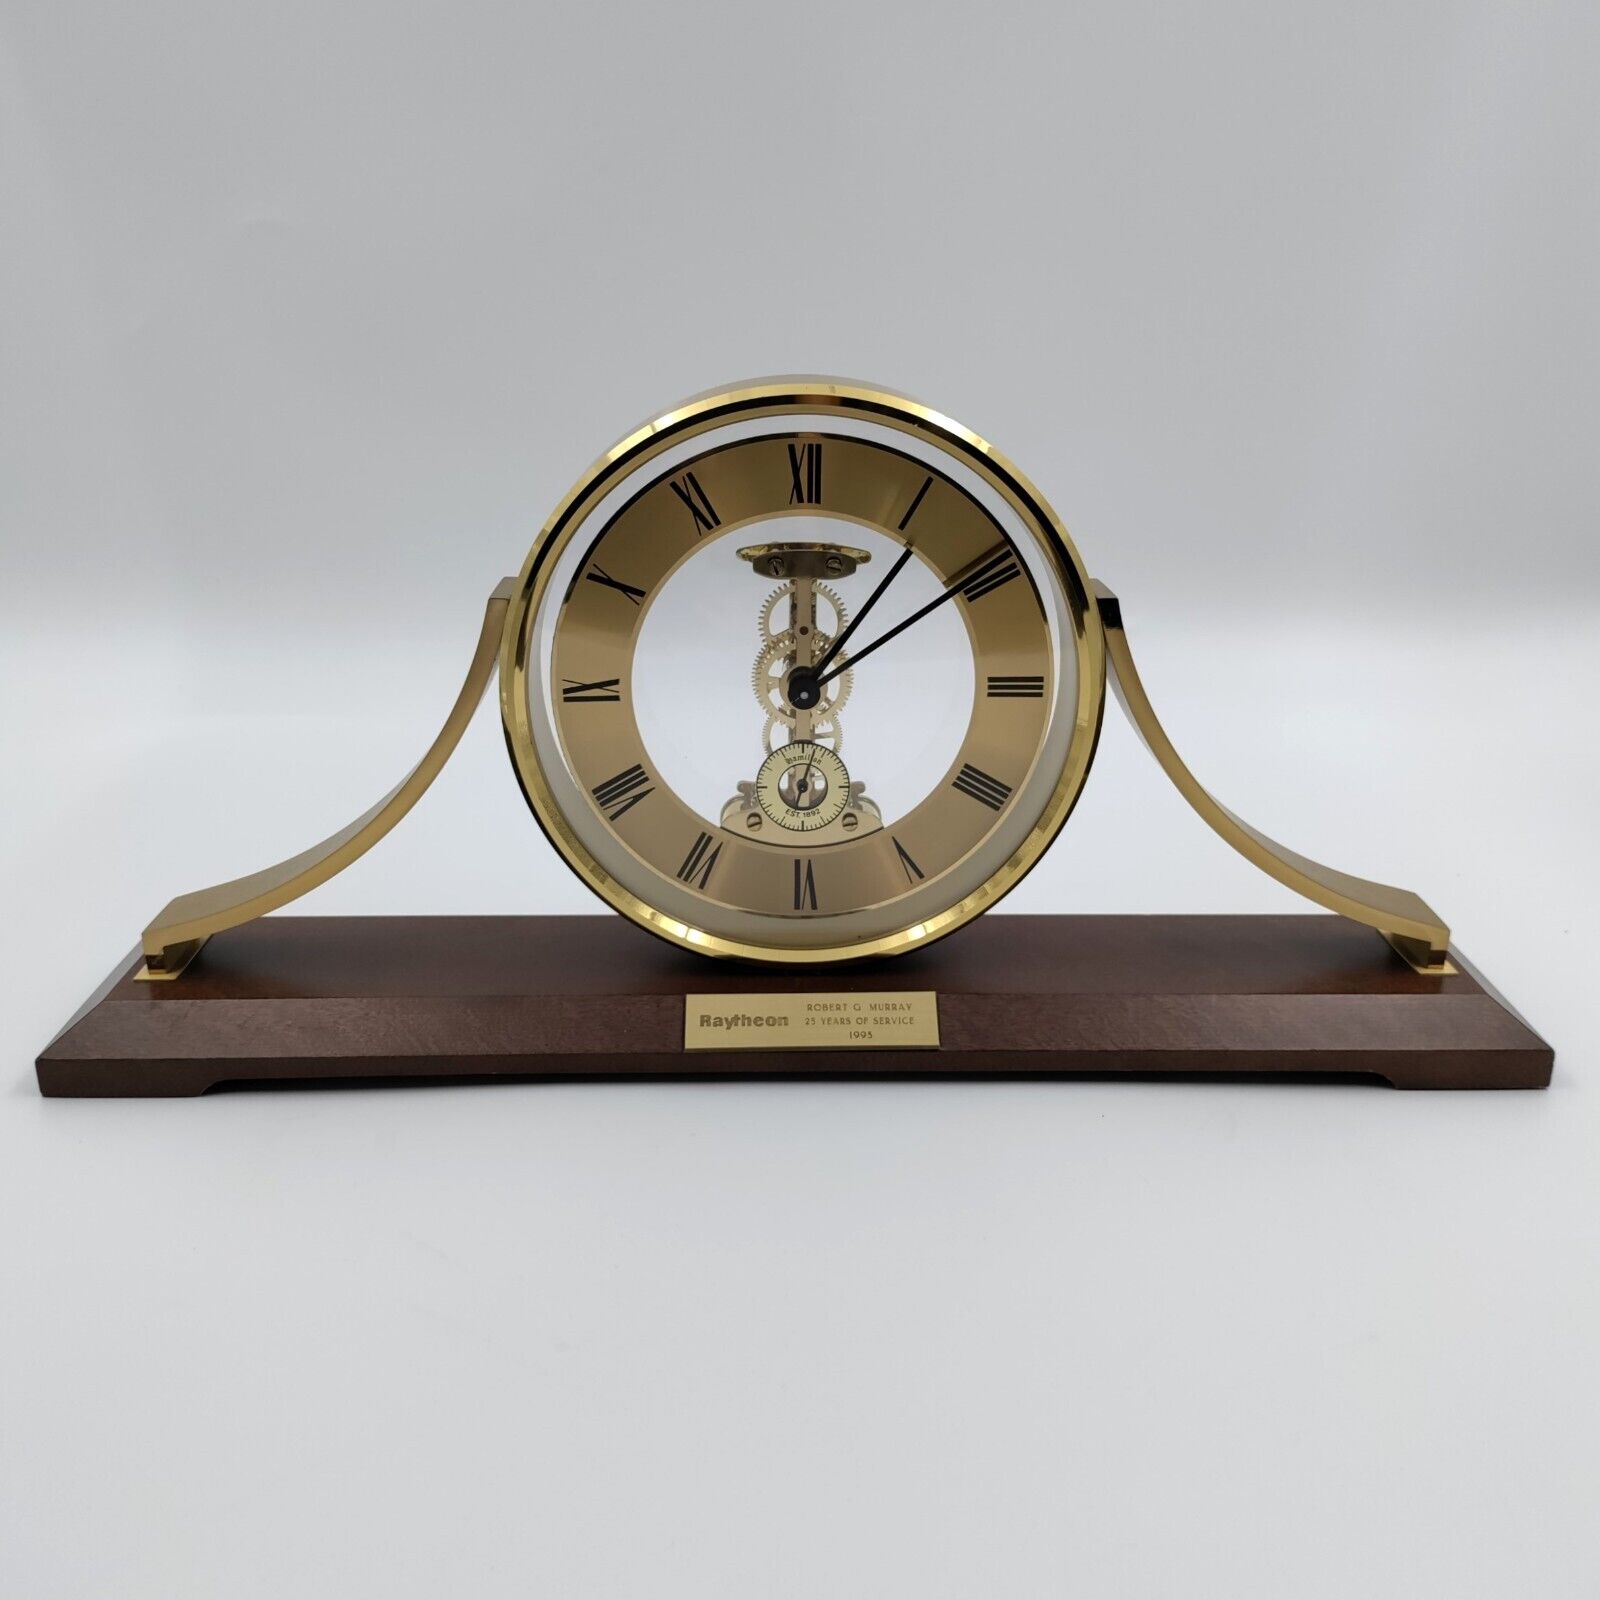 Vintage Hamilton Germany Raytheon 25 Years of Service 1993 Employee Clock -WORKS